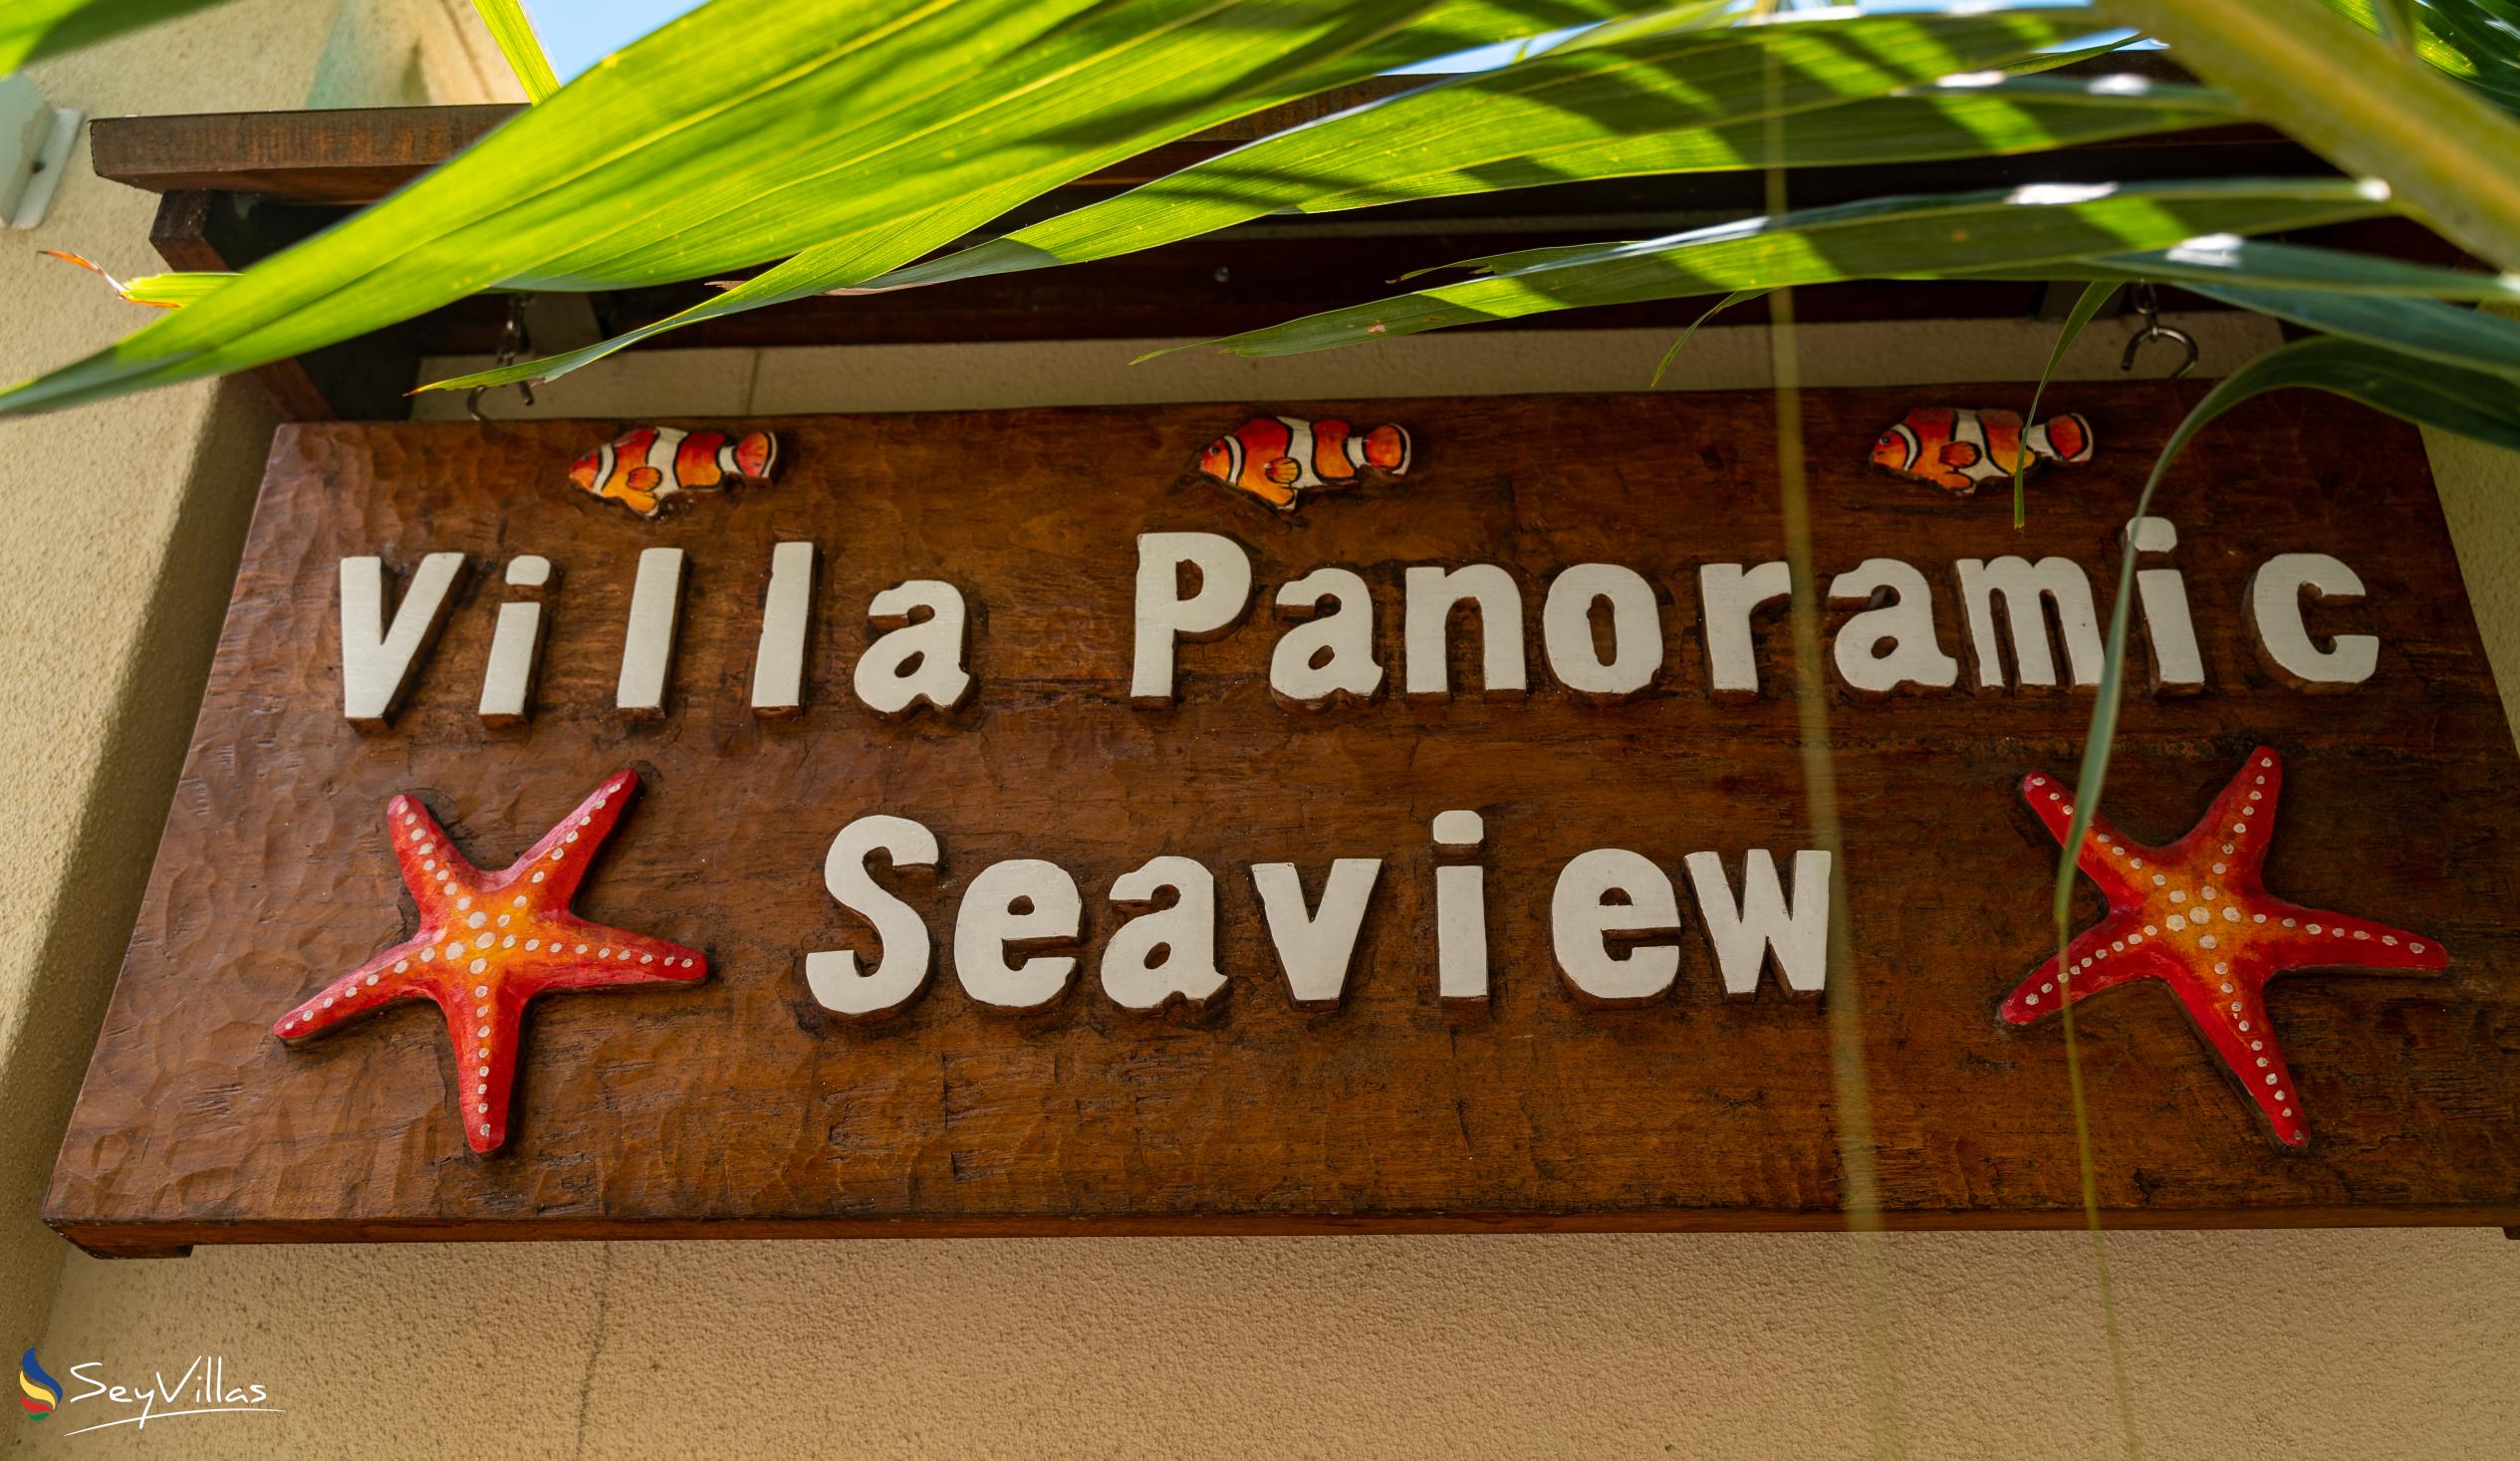 Photo 53: Villa Panoramic Seaview - Indoor area - Mahé (Seychelles)